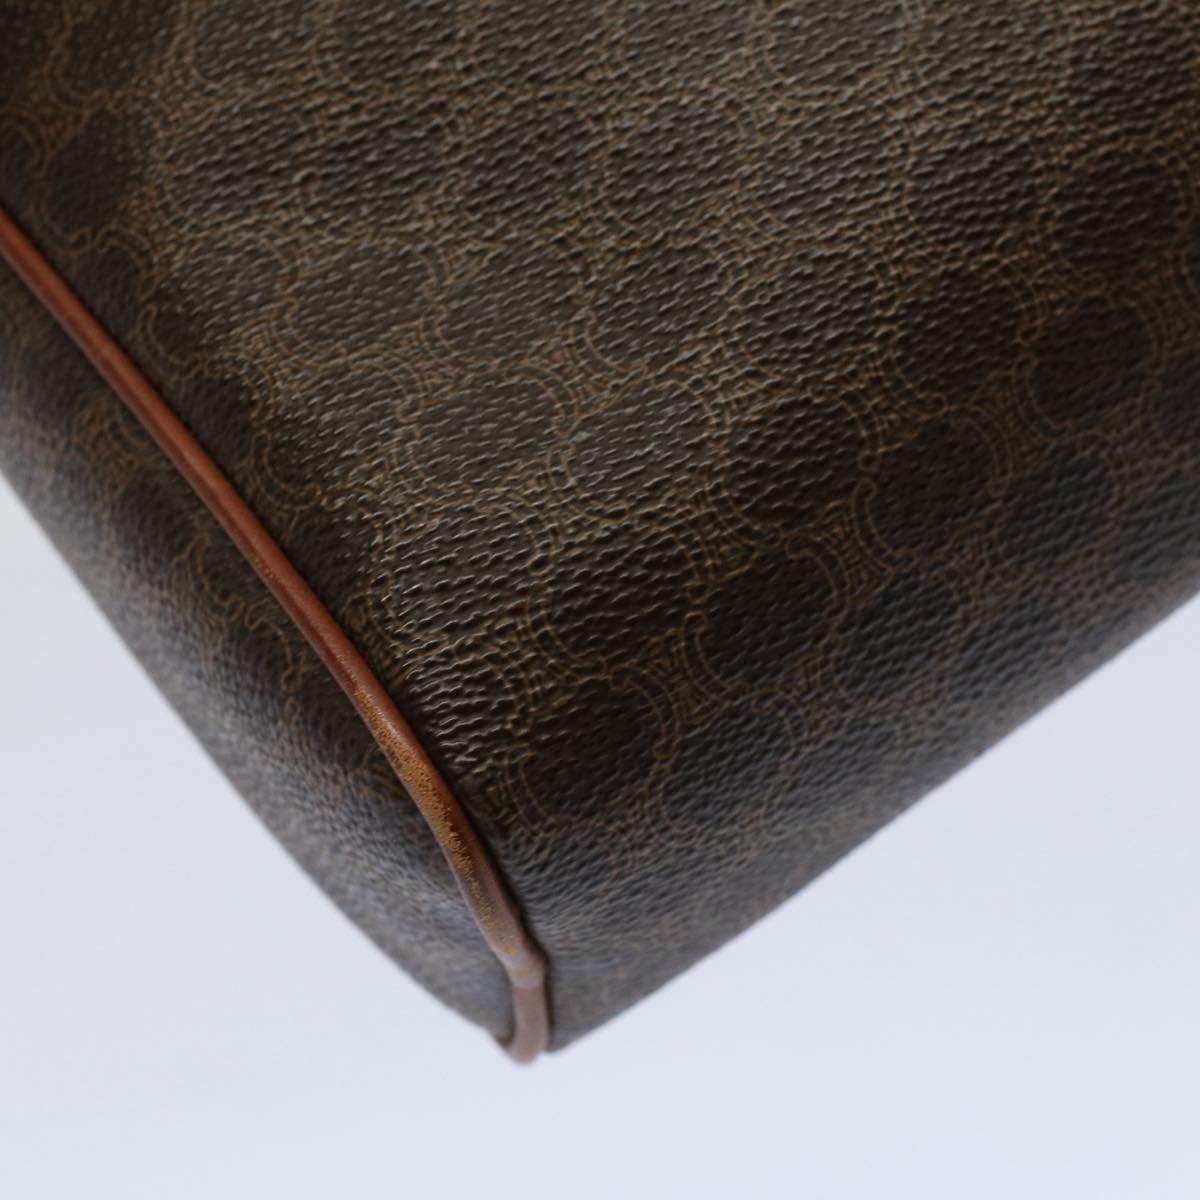 CELINE Macadam Canvas Clutch Bag PVC Leather Brown Auth 57379